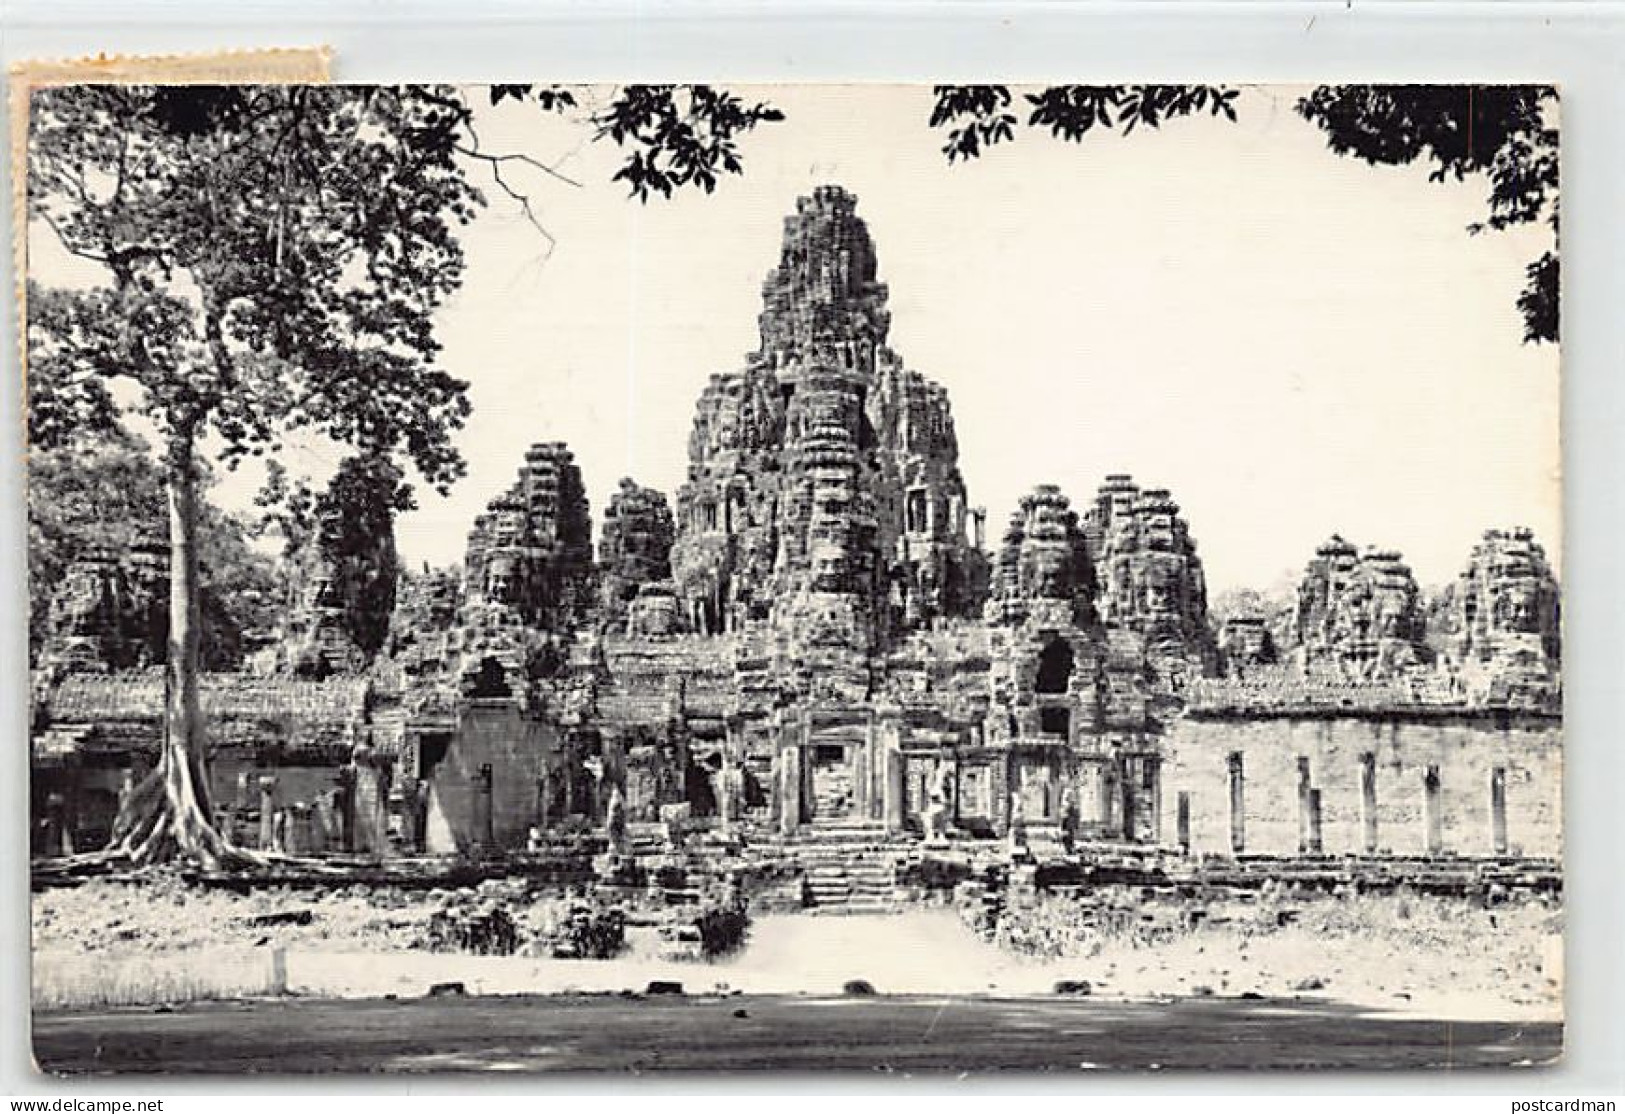 Cambodge - ANGKOR - Le Bayon, Façade Septentrionale - Ed. Inconnu  - Cambodia